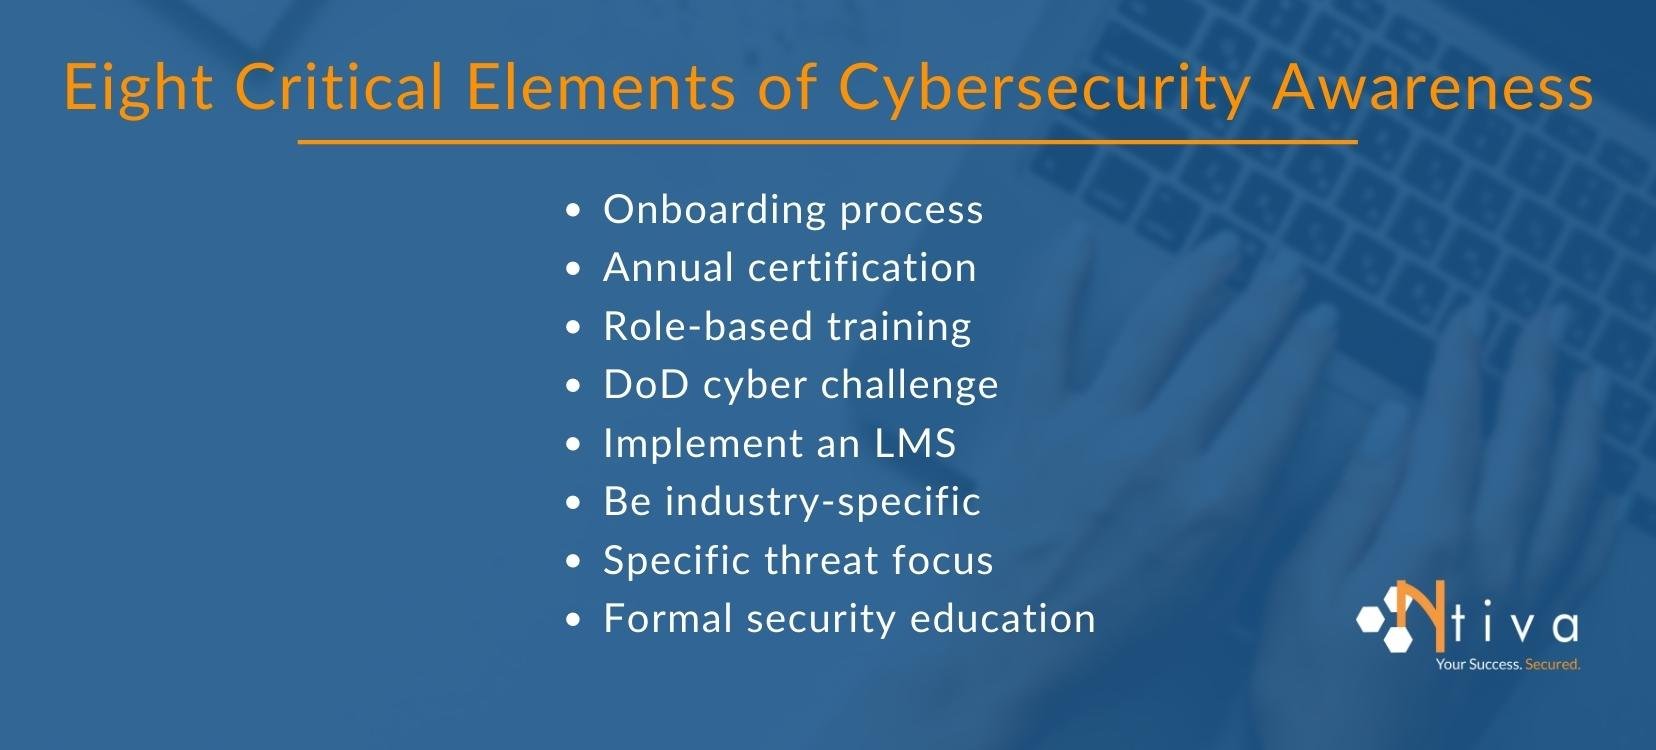 Cybersecurity Awareness LIST